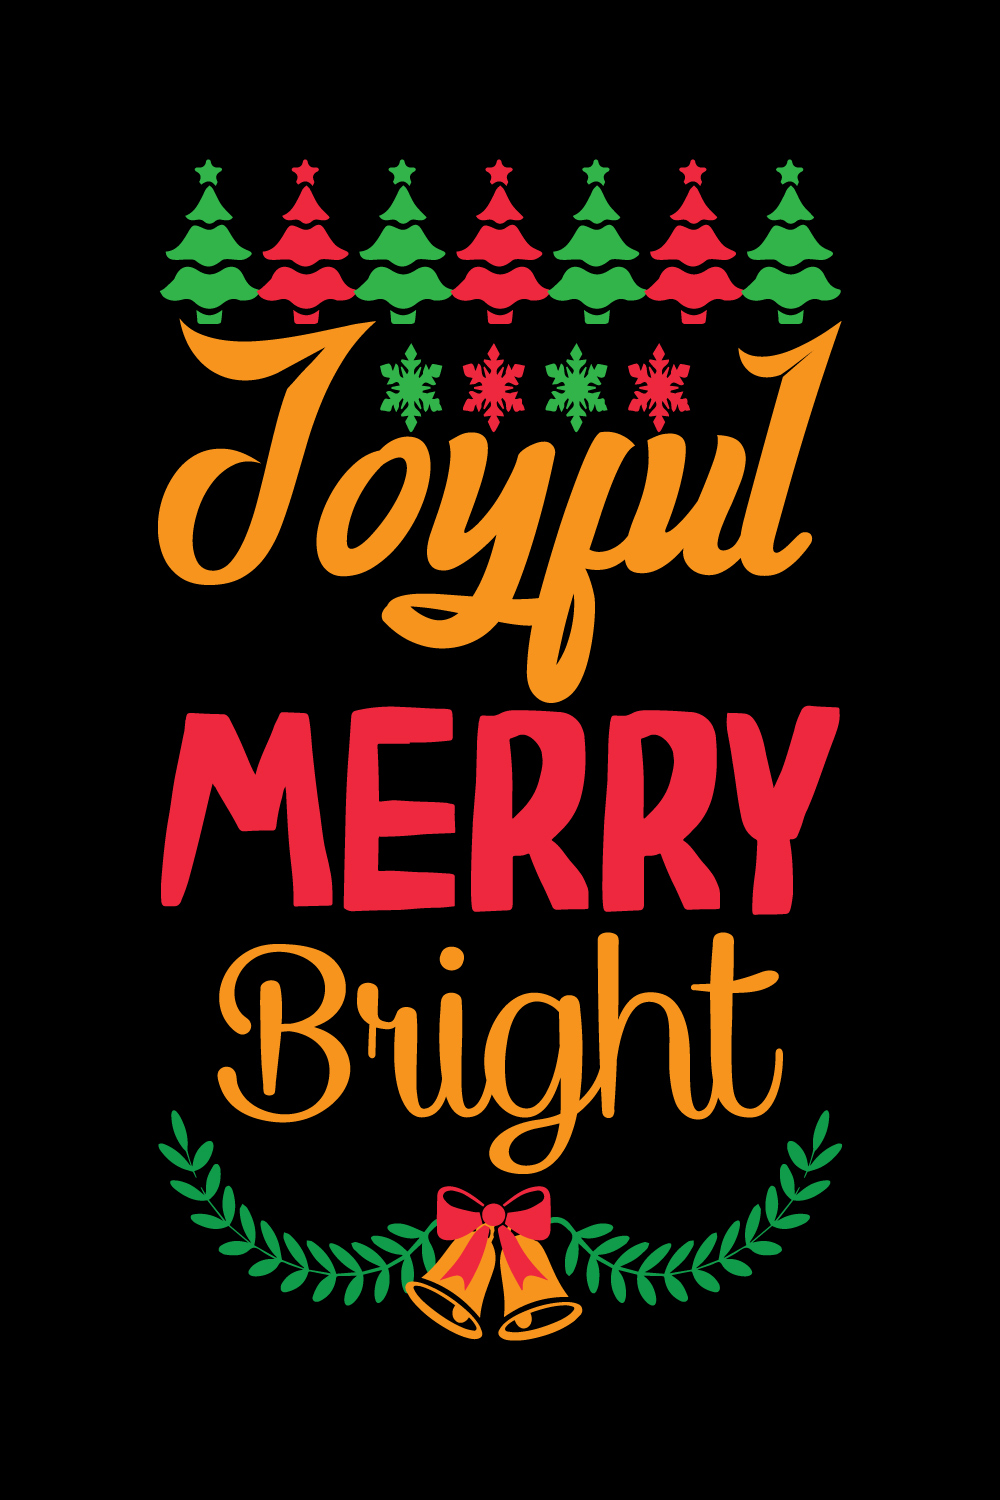 Christmas "Joyful Merry Bright" T-Shirt Design pinterest preview image.